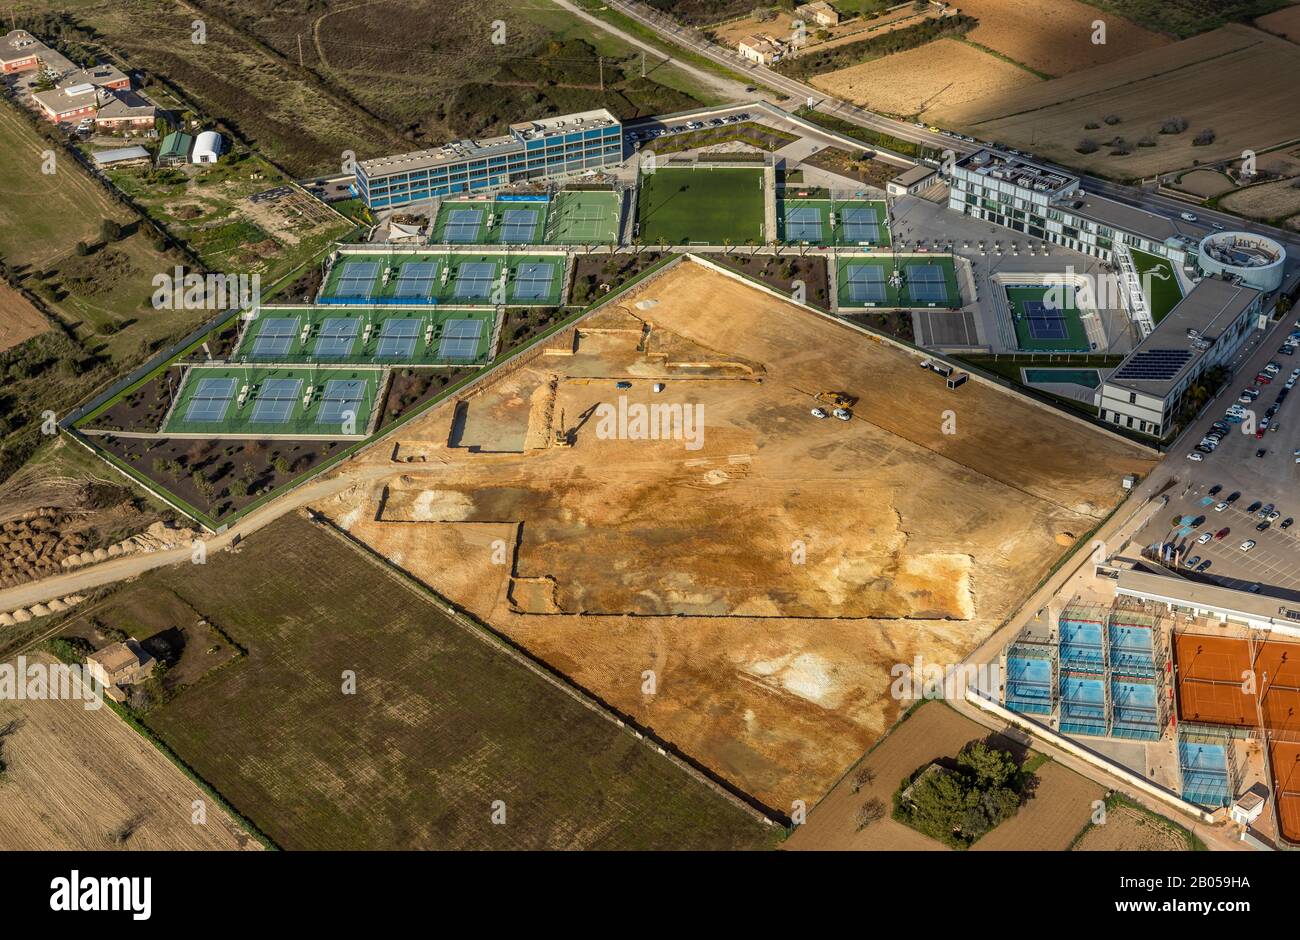 , aerial view, R.N. Sport Center, Rafael Nadal Tennis Center, Construction Site, Fartàritx, Manacor, Mallorca, Balearic Islands, Spain, Europe, Arena, Stock Photo